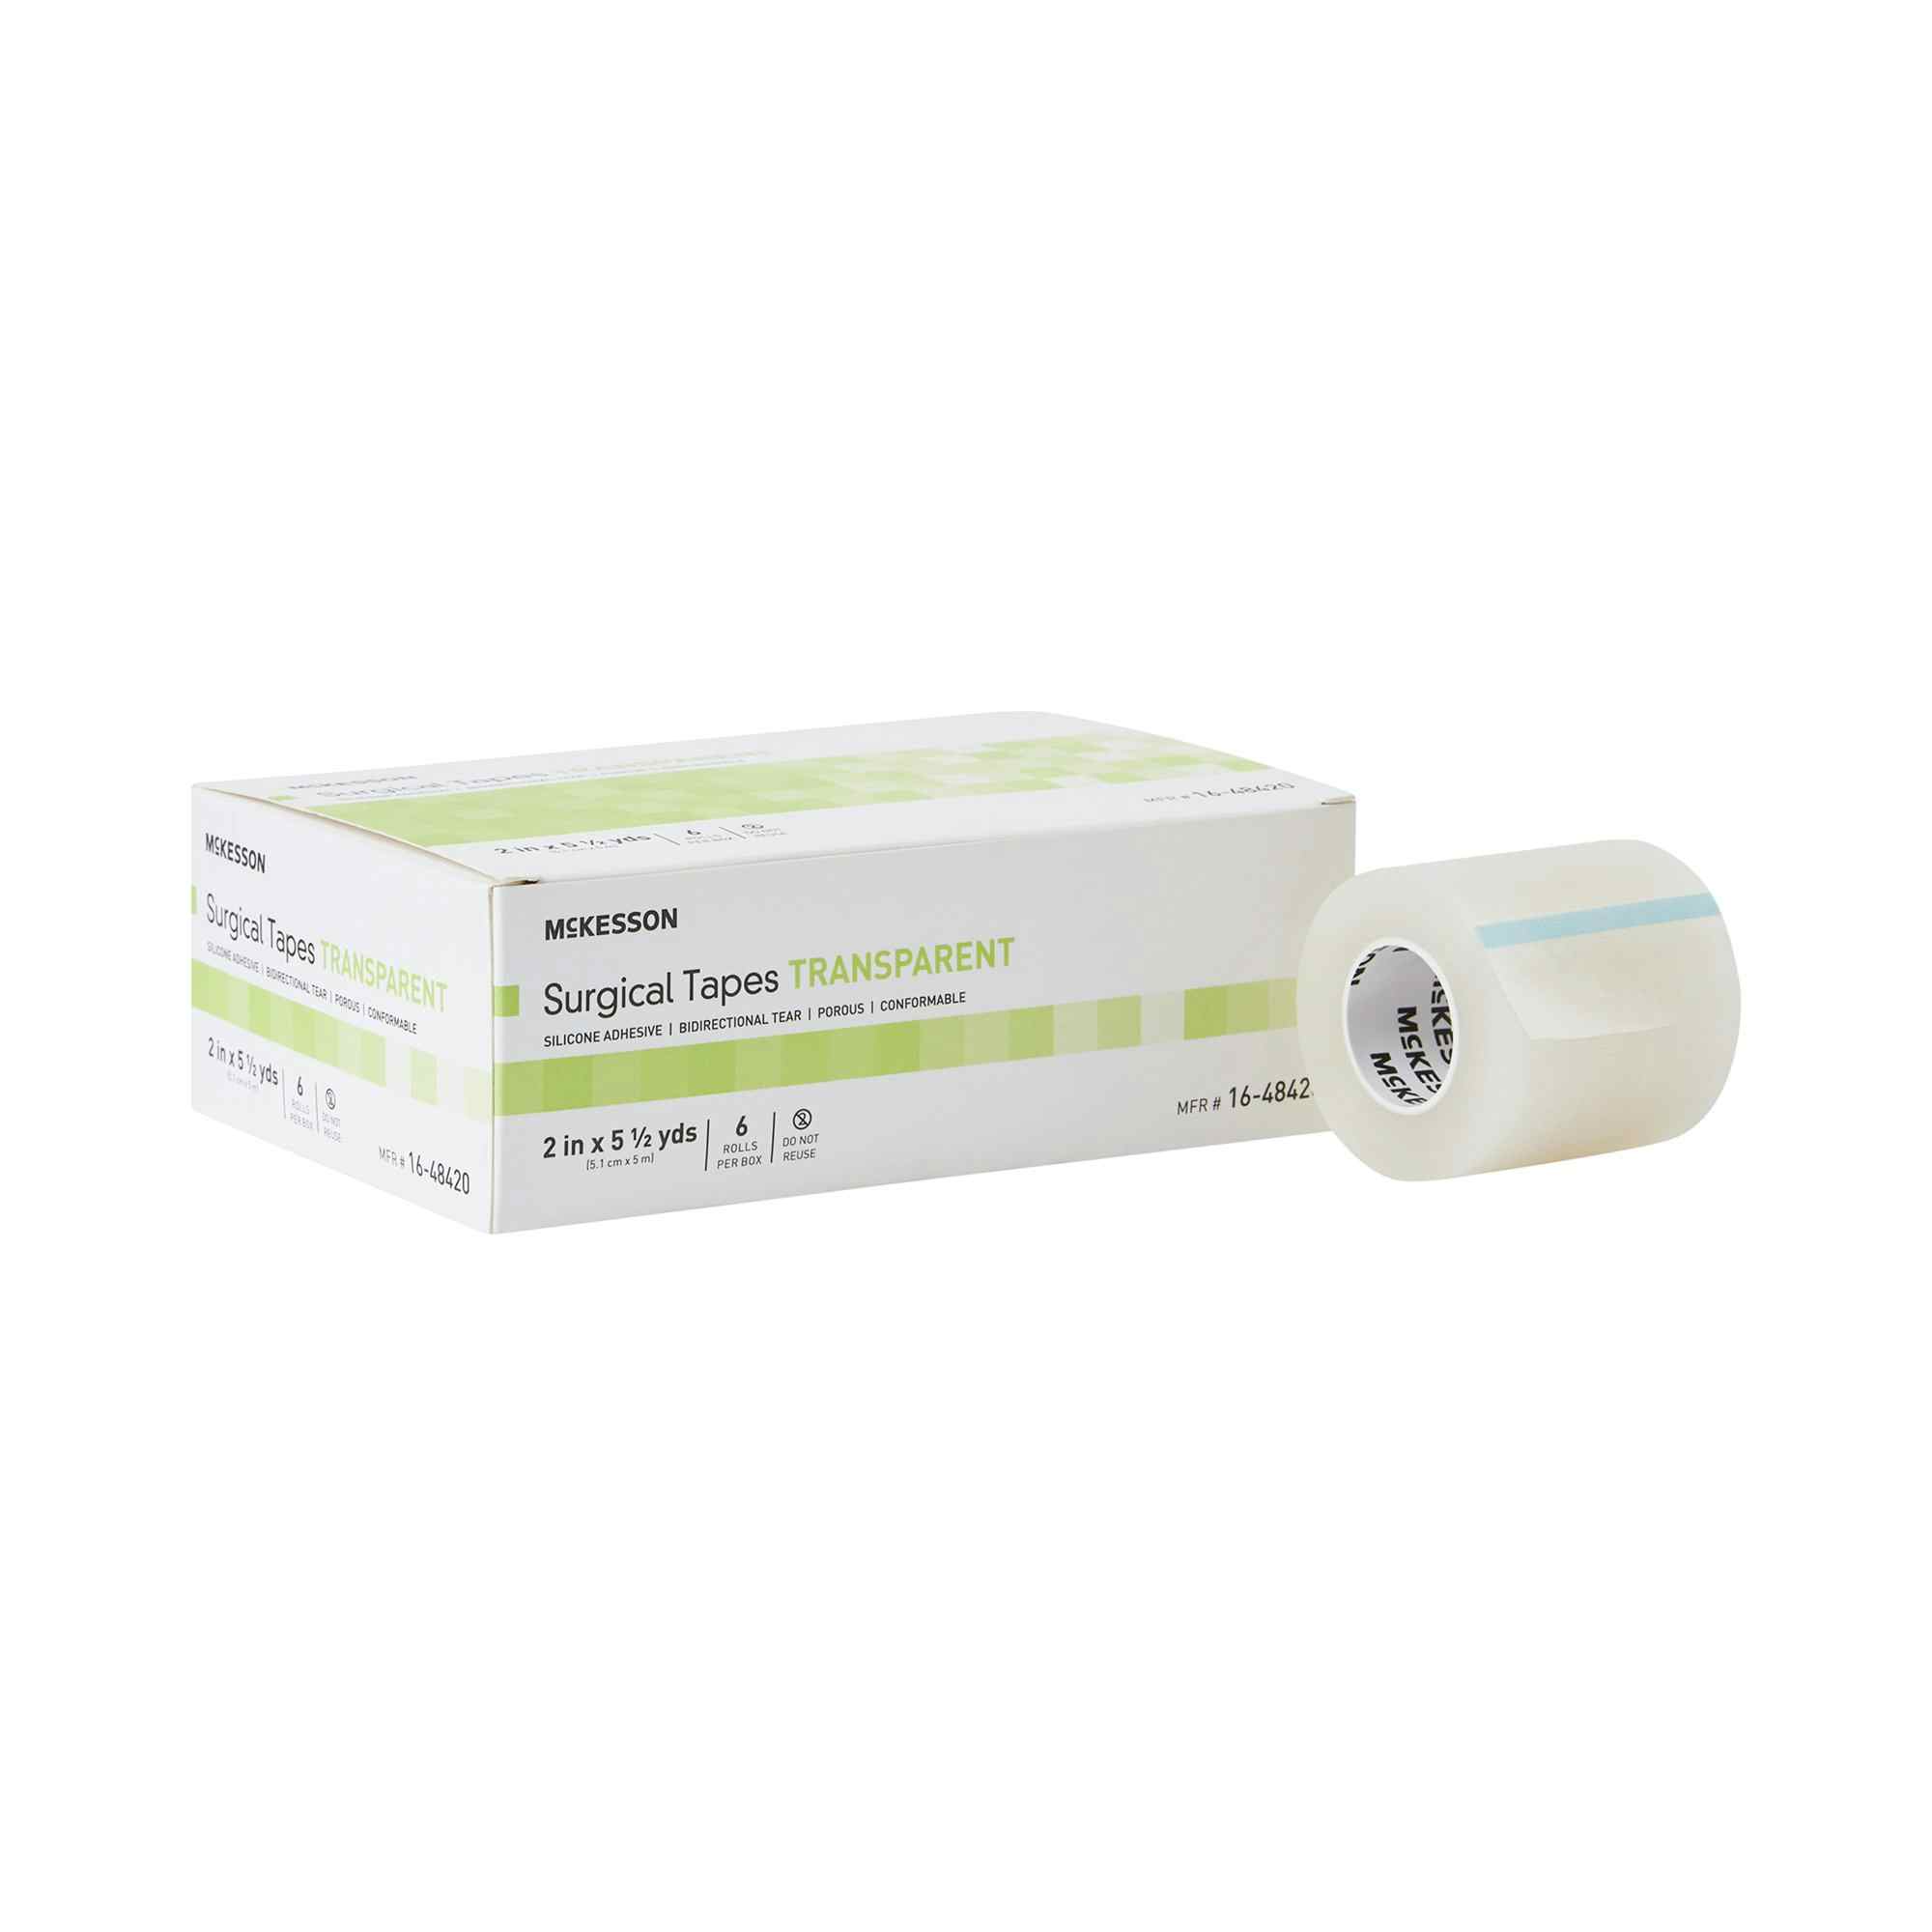 McKesson Silicone Medical Tape, 2 Inch x 5½ Yard, Transparent, 16-48420, Box of 6